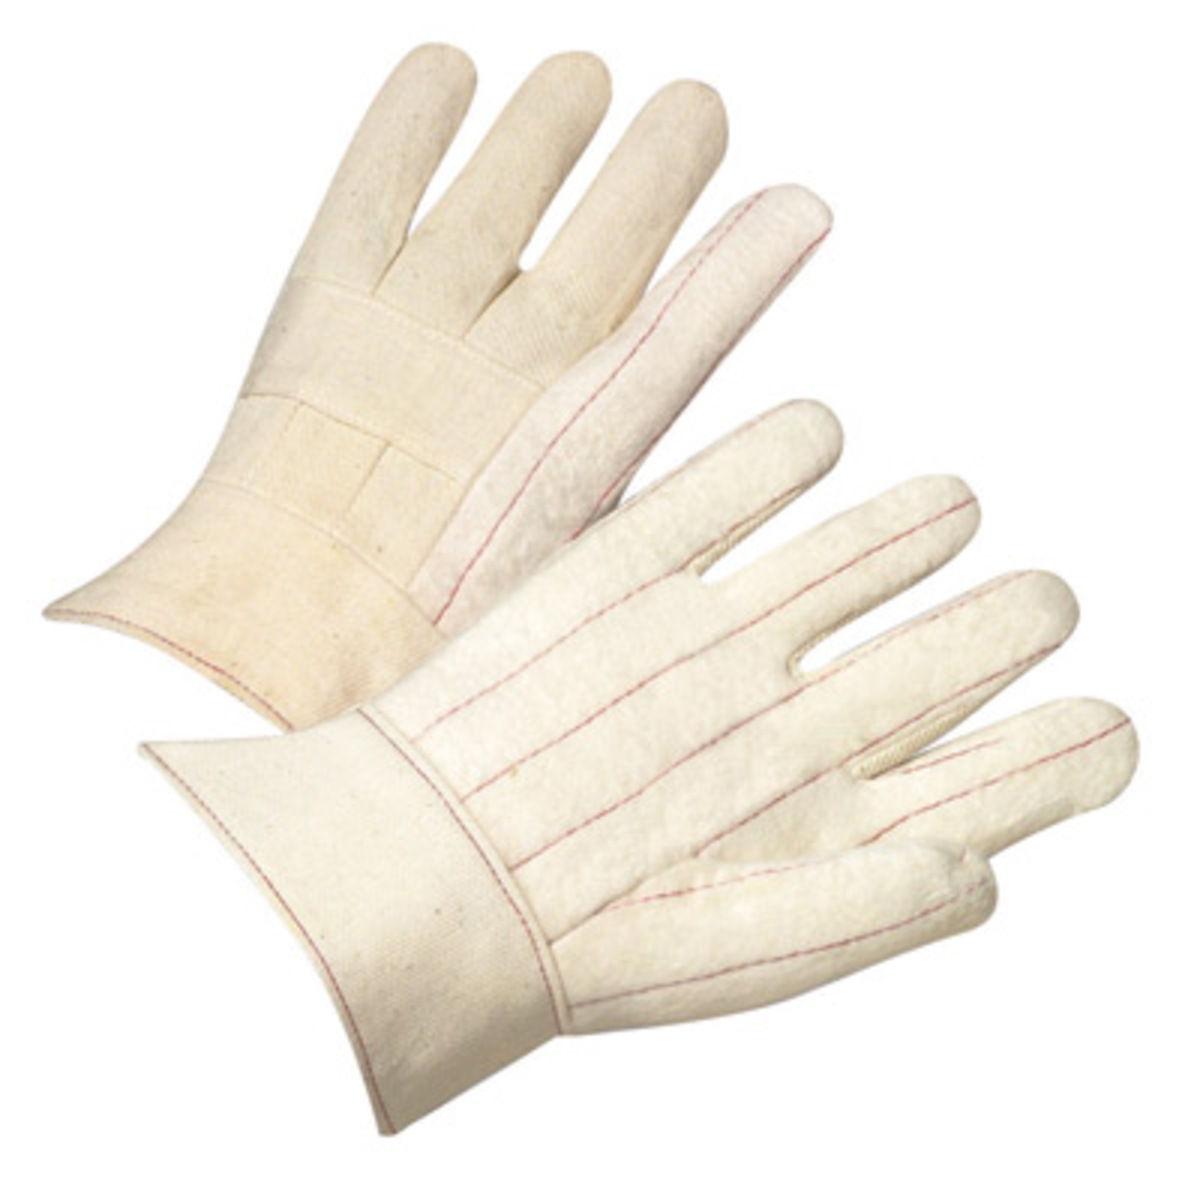 RADNOR® Natural Heavy Weight Cotton Hot Mill Gloves With Gauntlet Cuff